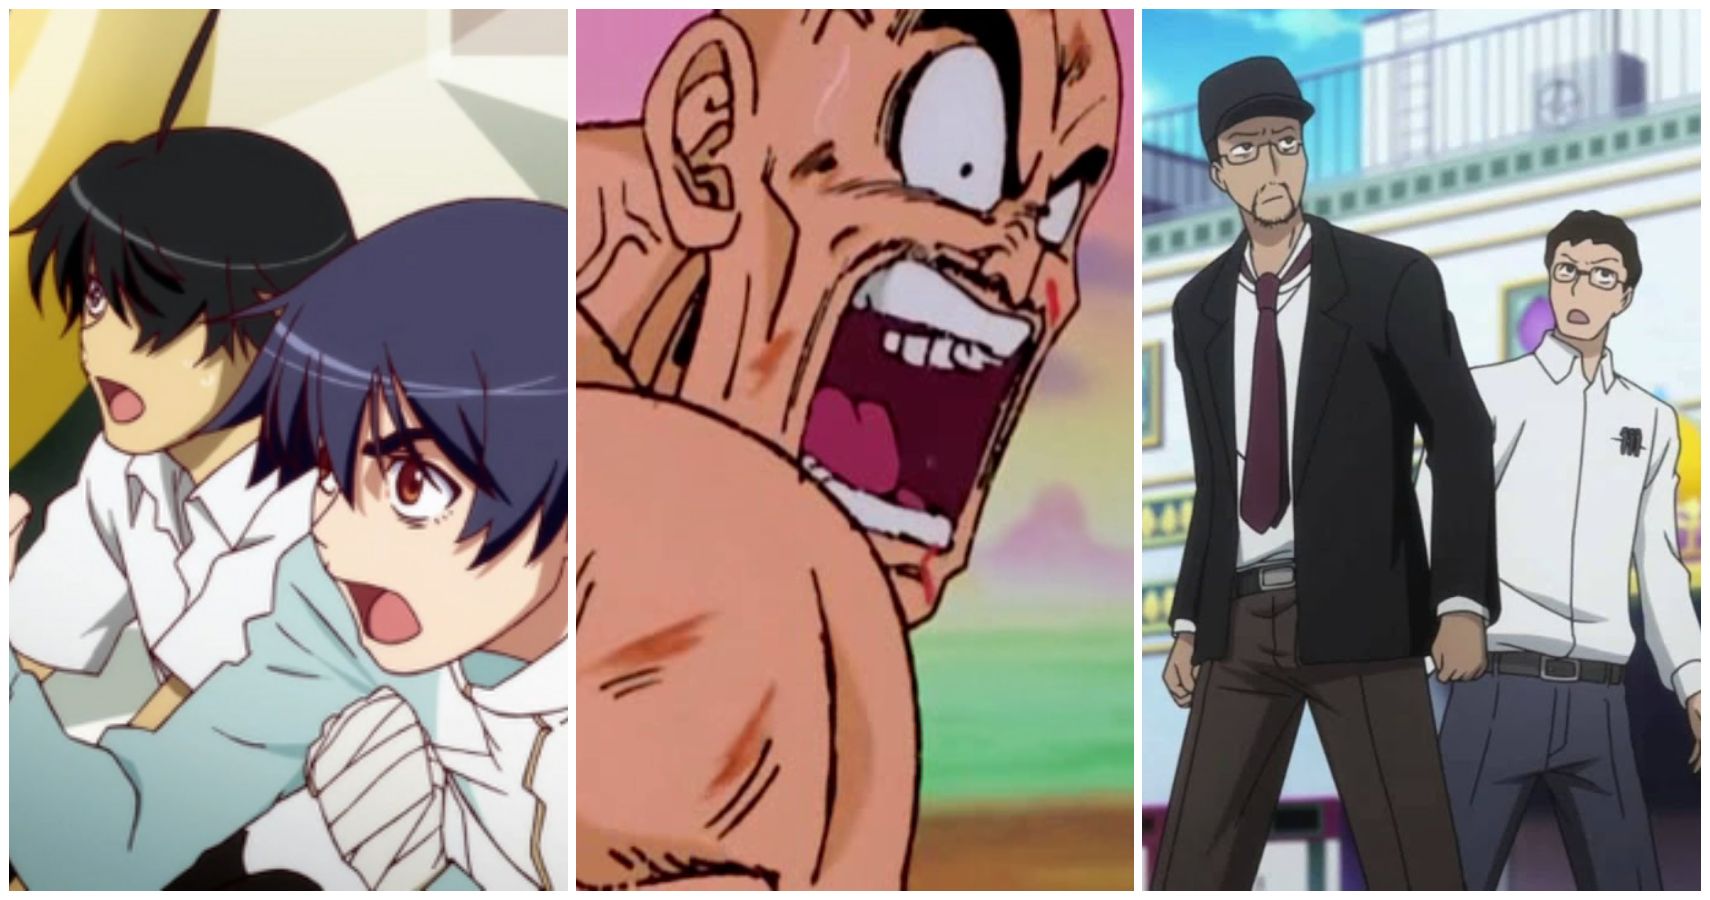 meme - Where do these faces originate from? - Anime & Manga Stack